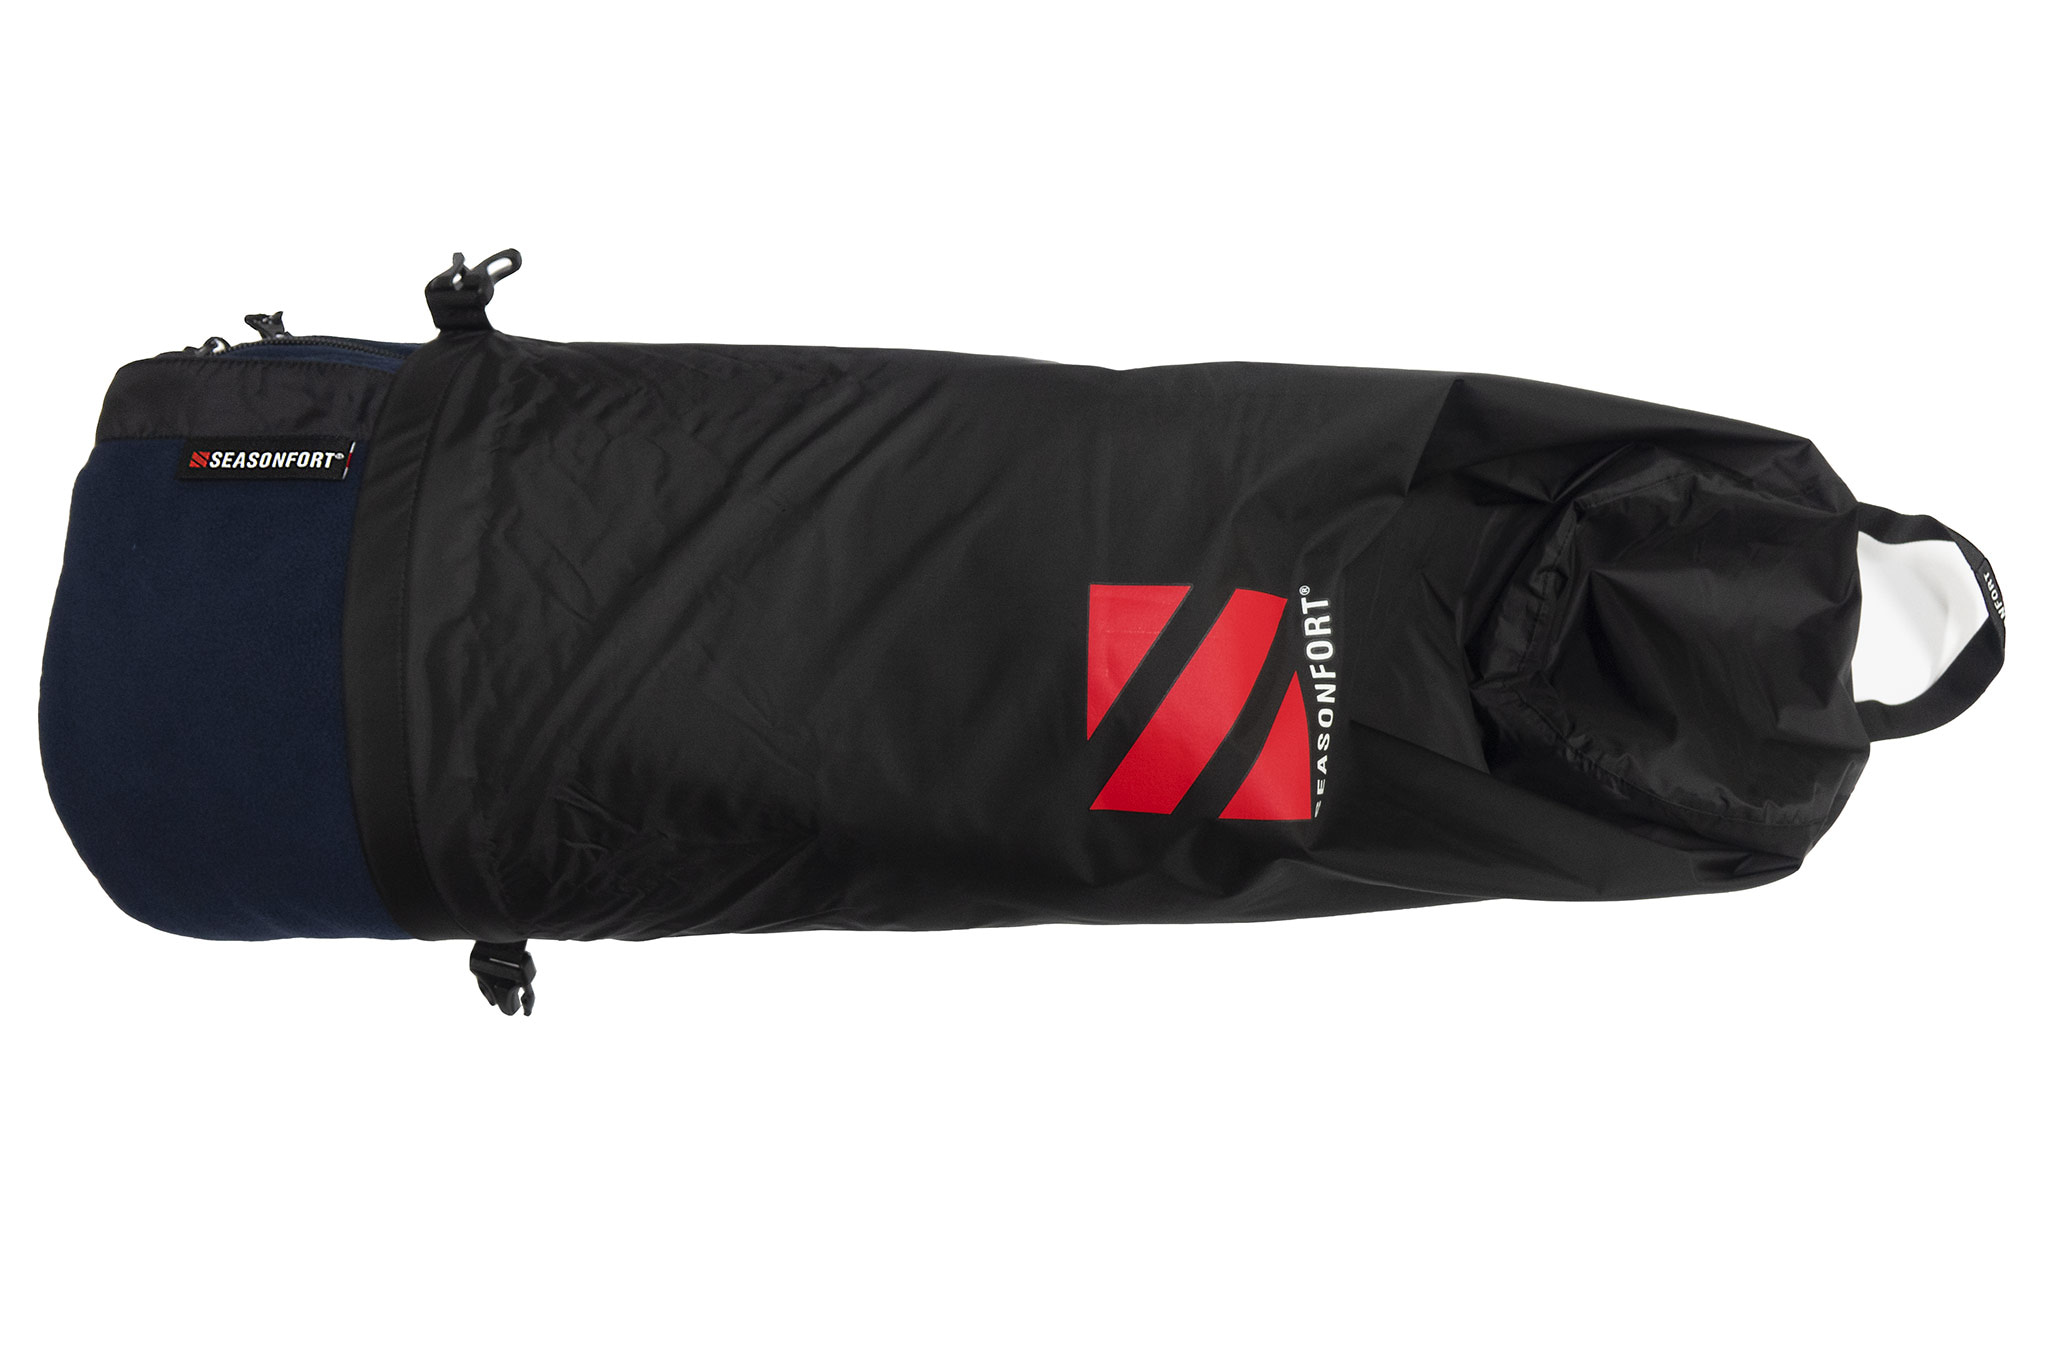 SEASONFORT Fire Retardant Sleeping Bag and Dry Bag